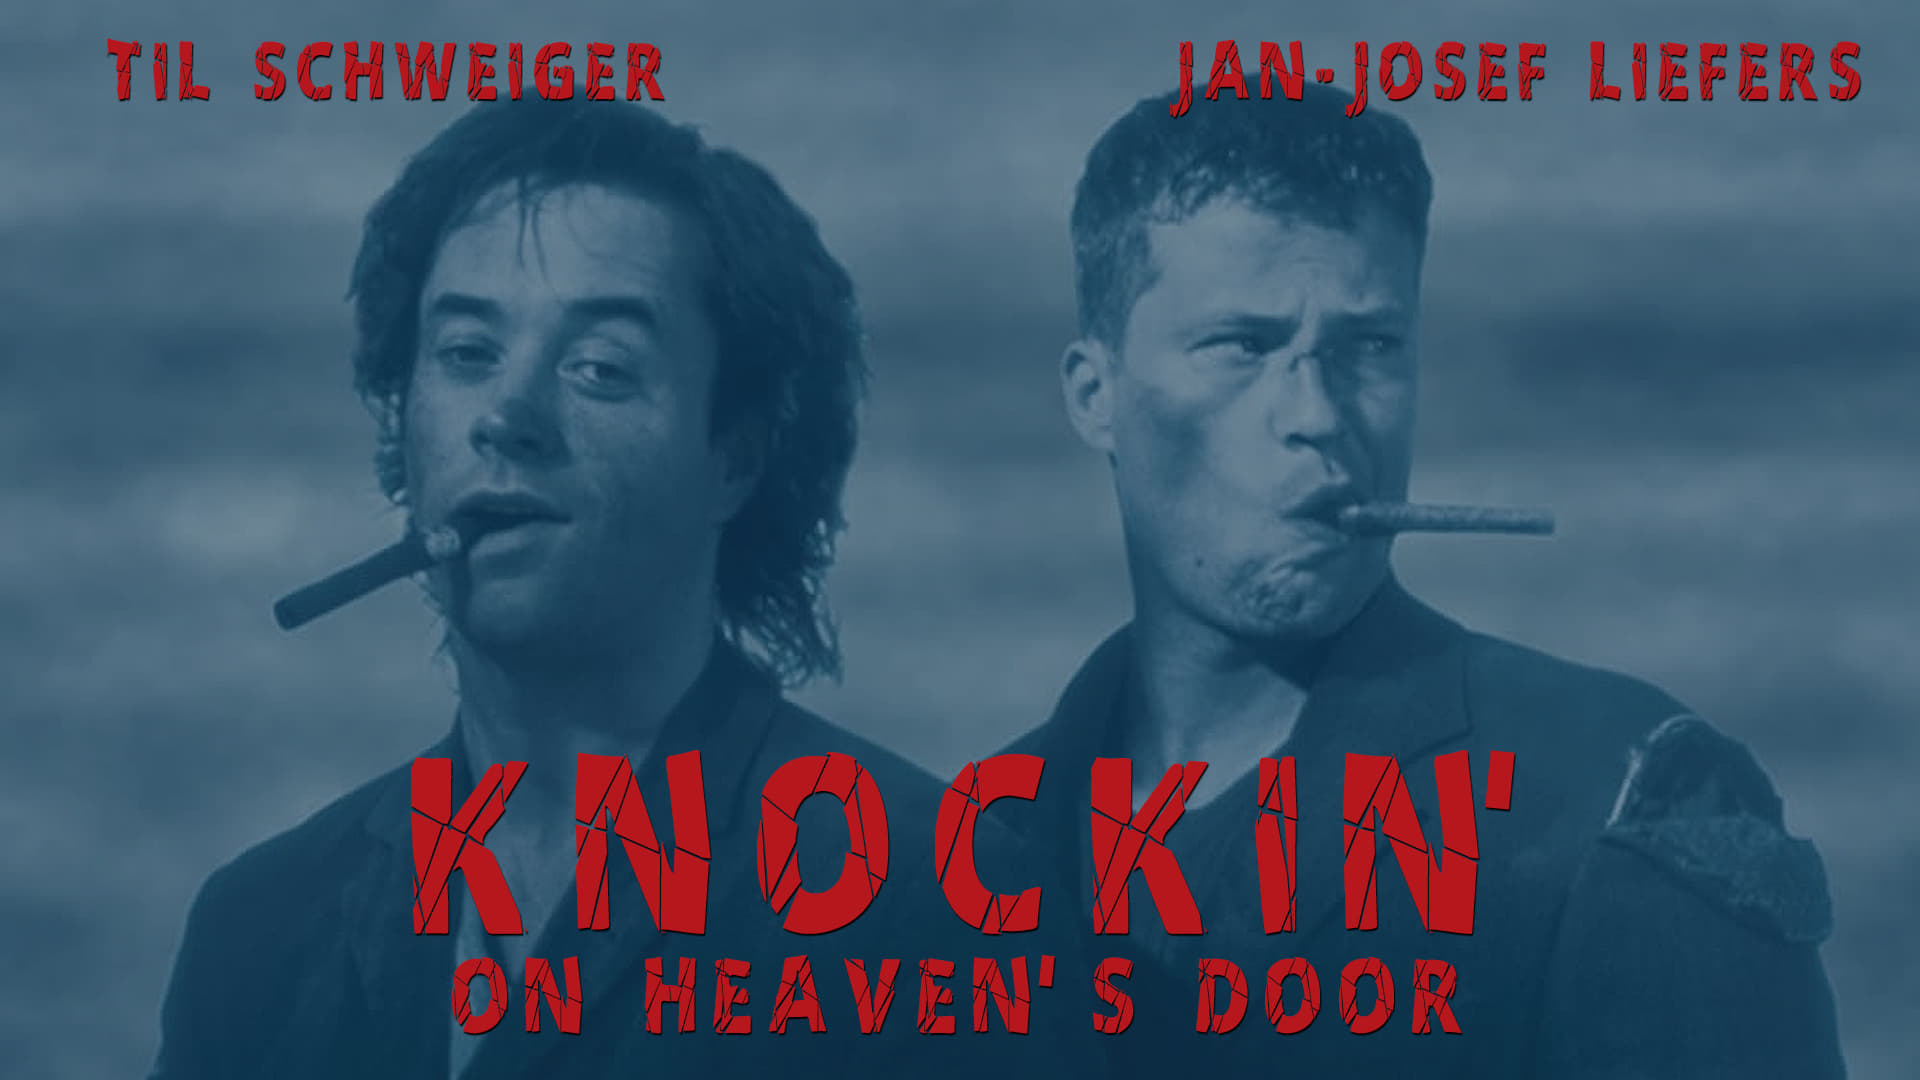 Watch Knockin On Heaven S Door 1997 Full Movie Straming Online Free Movie And Tv Online Hd